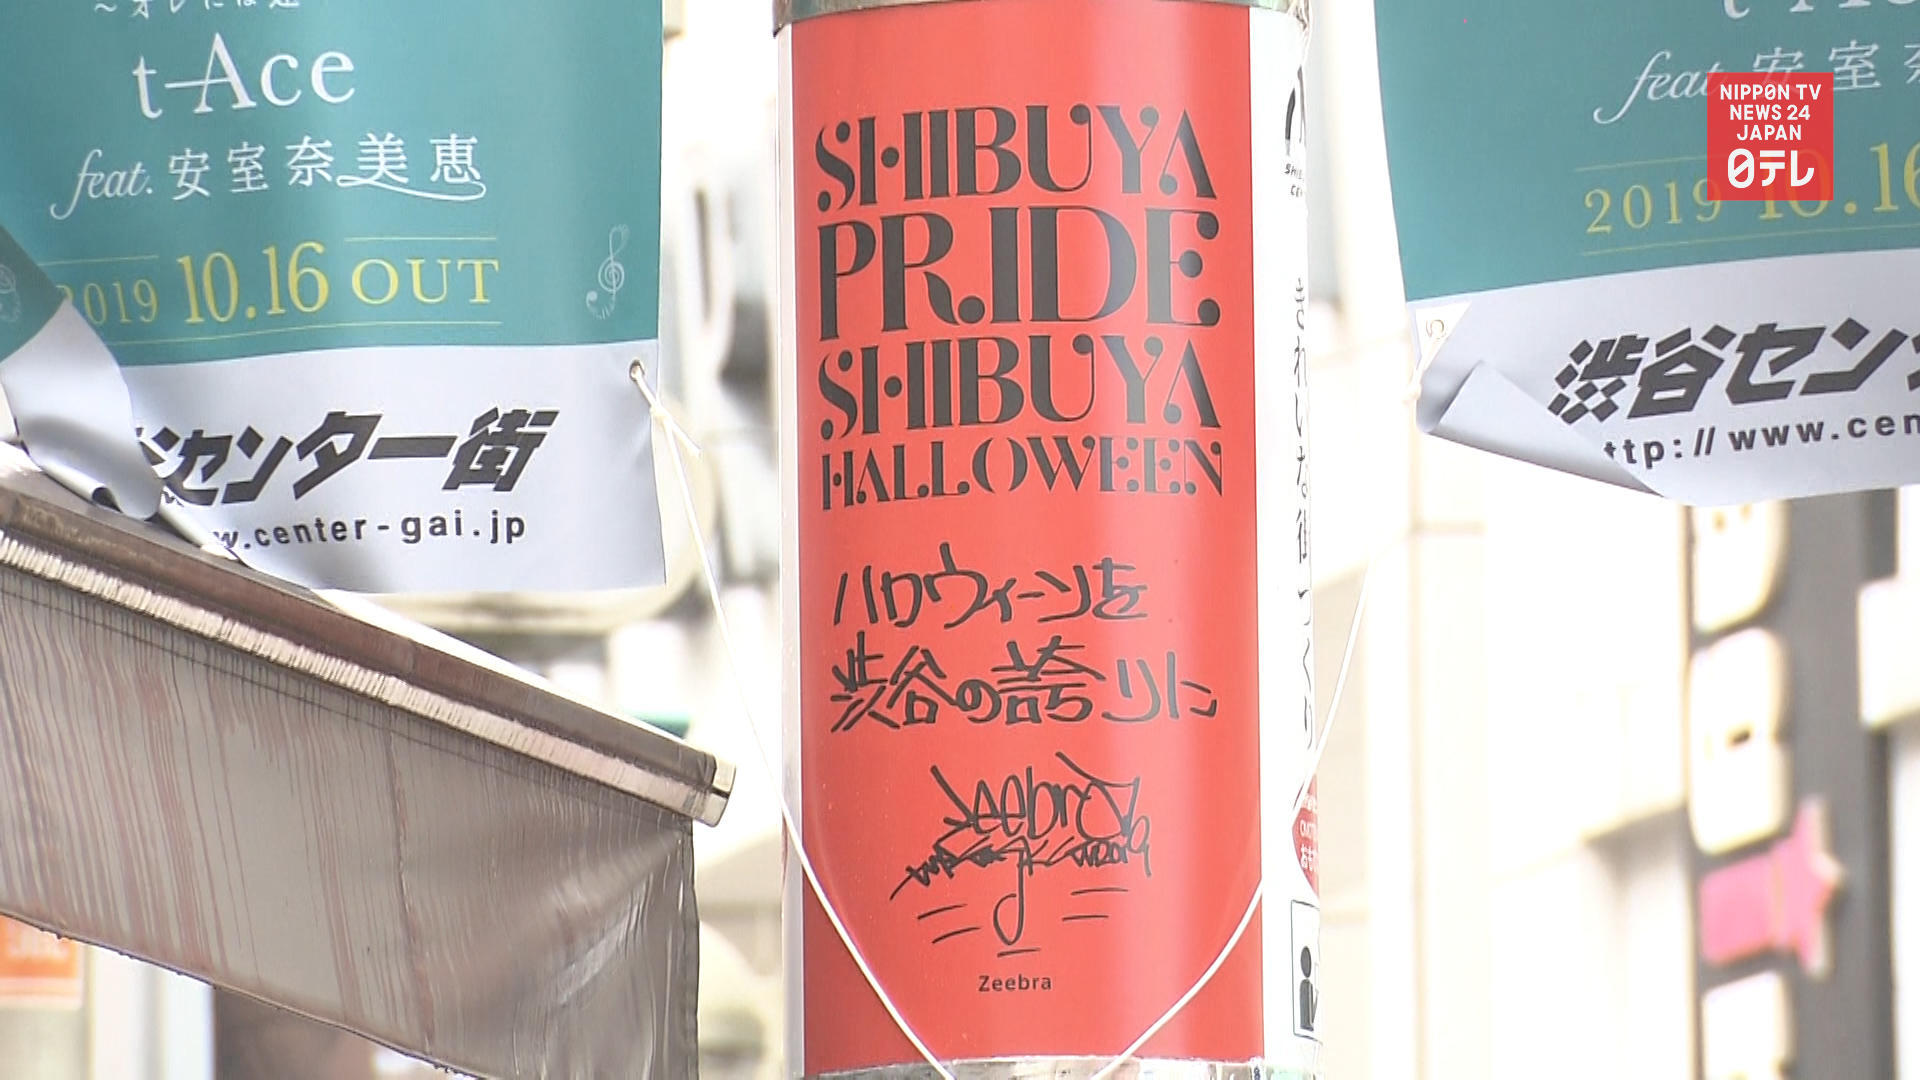 Halloween drinking banned on Shibuya streets